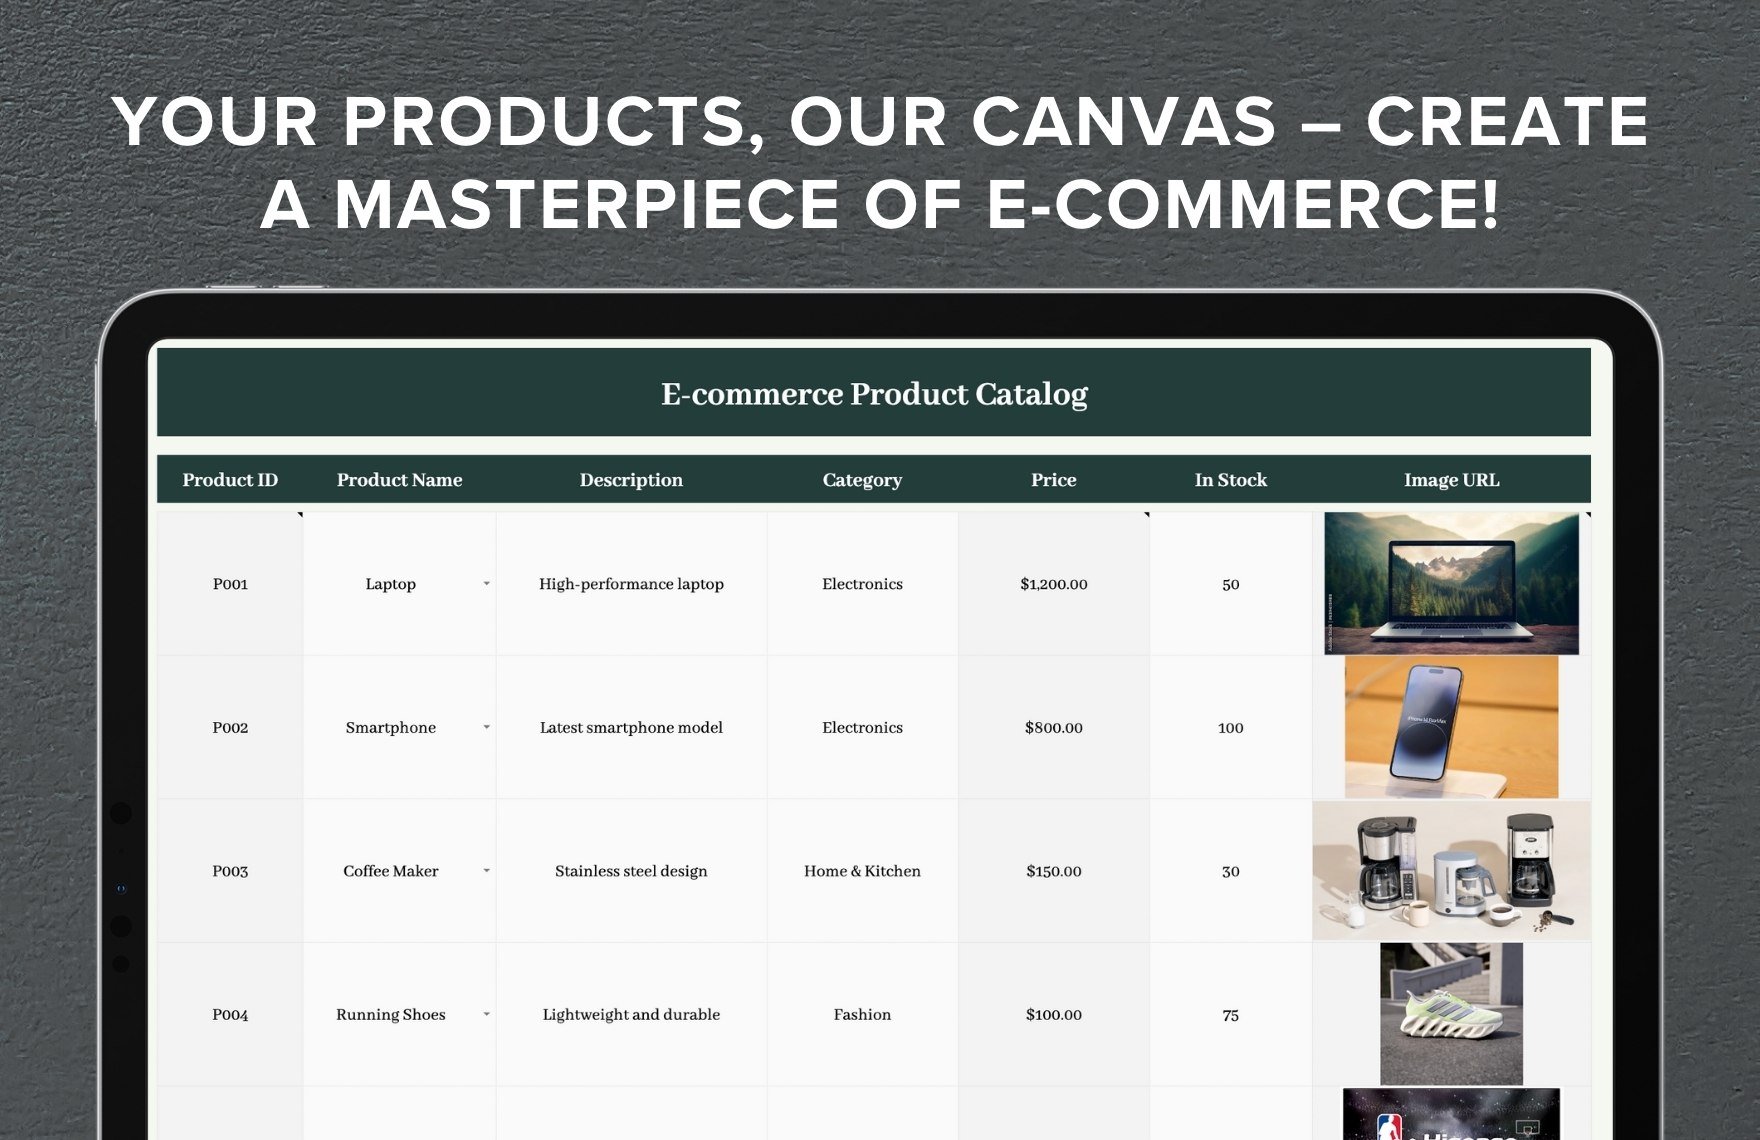 E-commerce Product Catalog Template